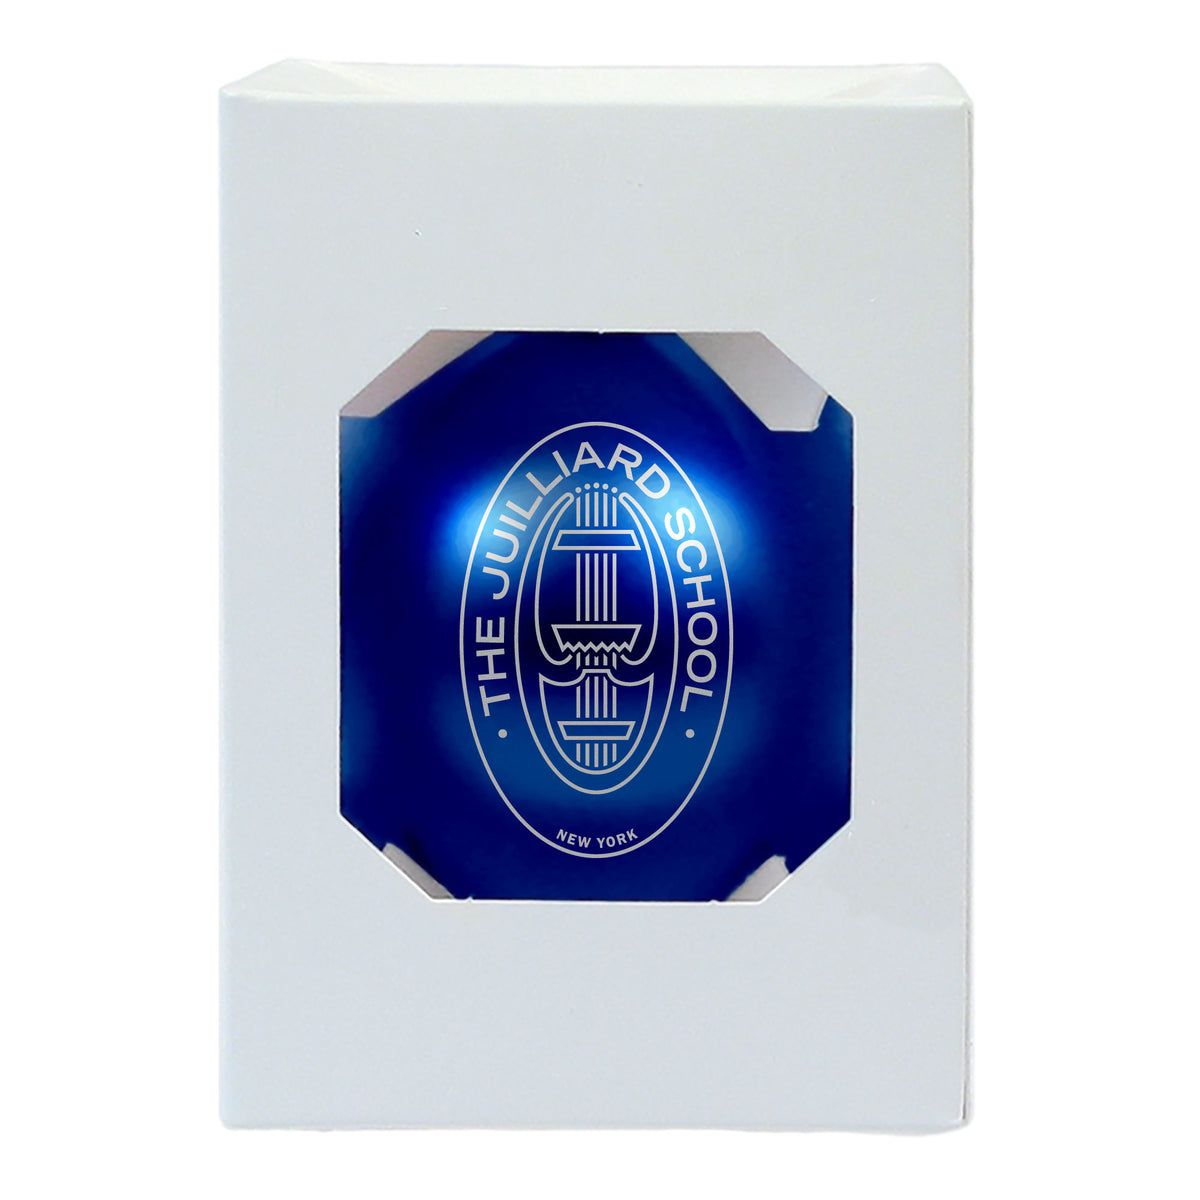 Ornament: Shatterproof Ball Blue with Juilliard Seal